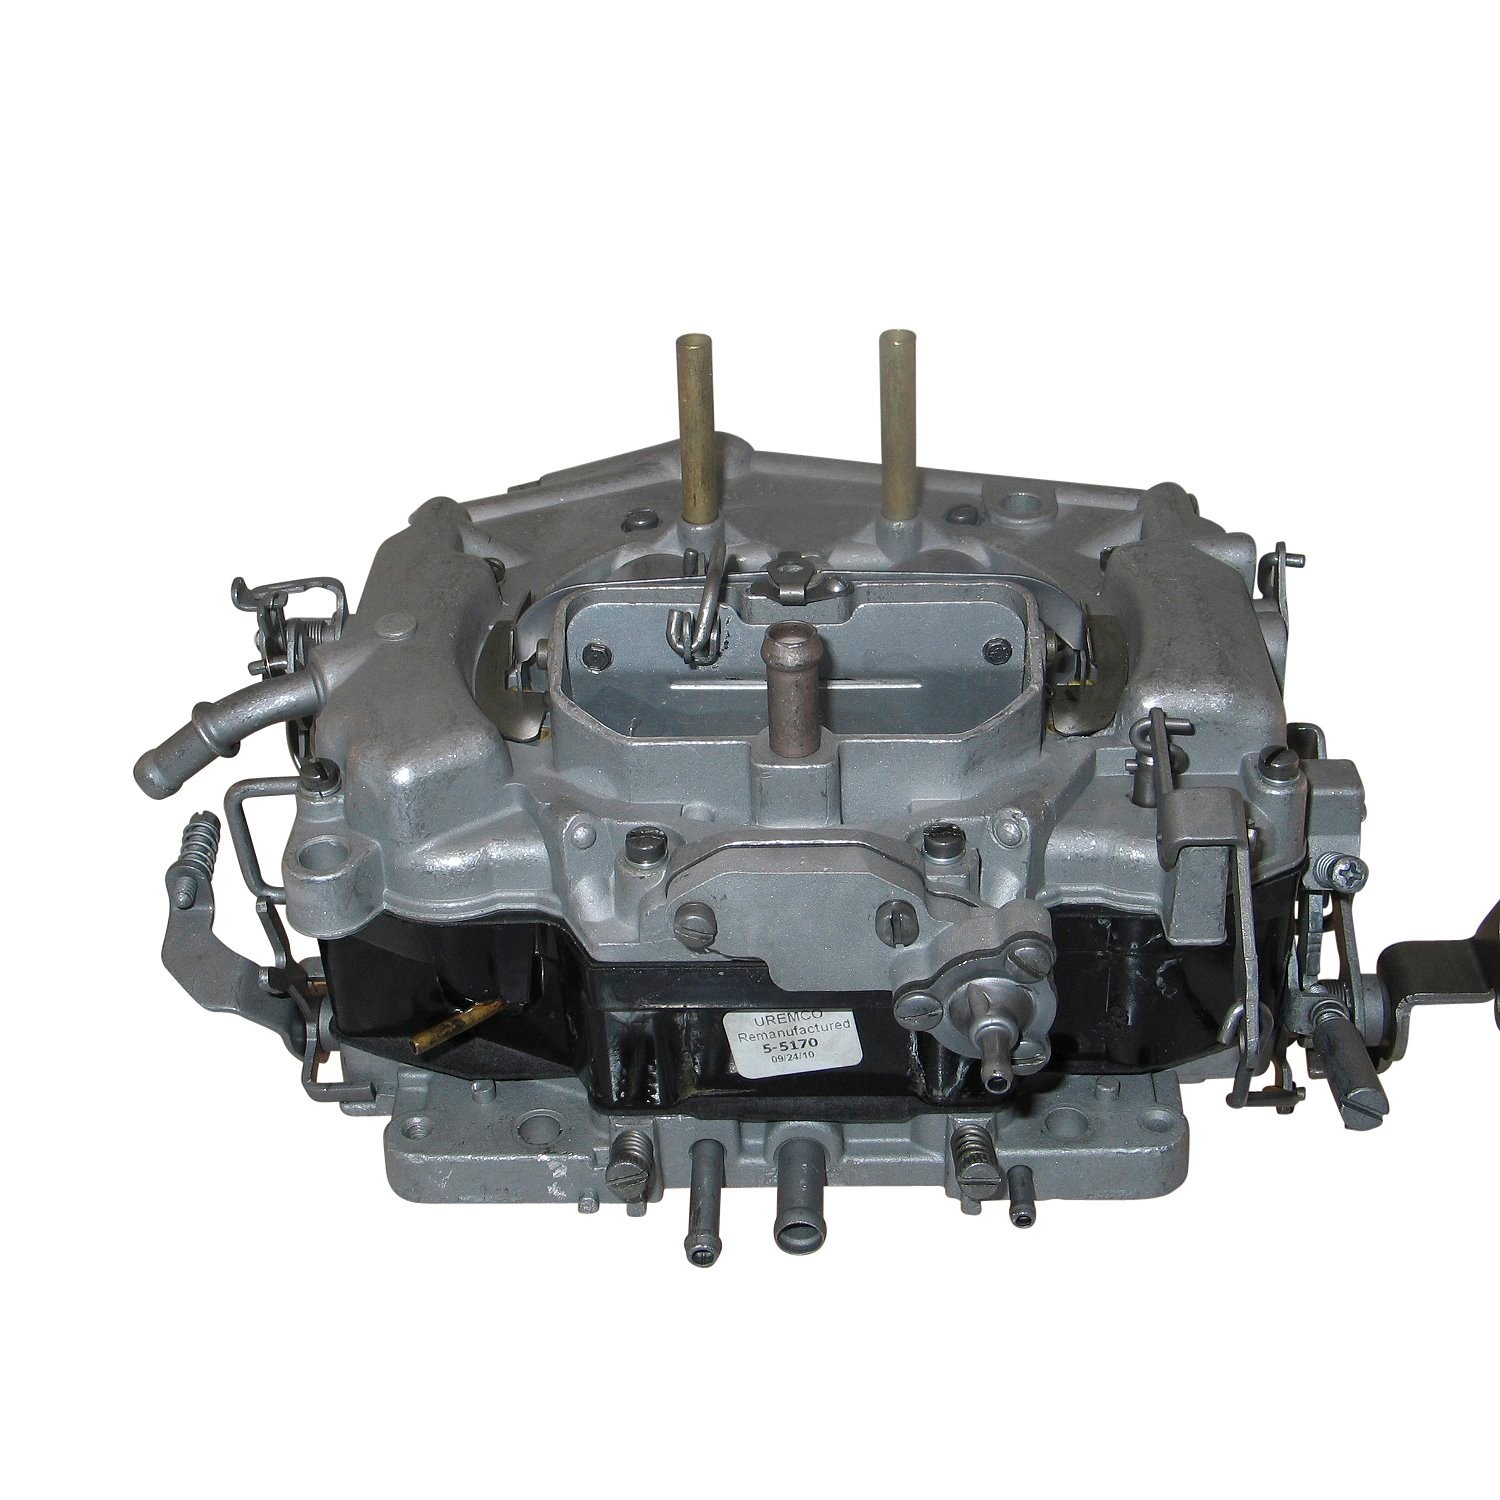 5-5170 Carter Remanufactured Carburetor, TQ-Style